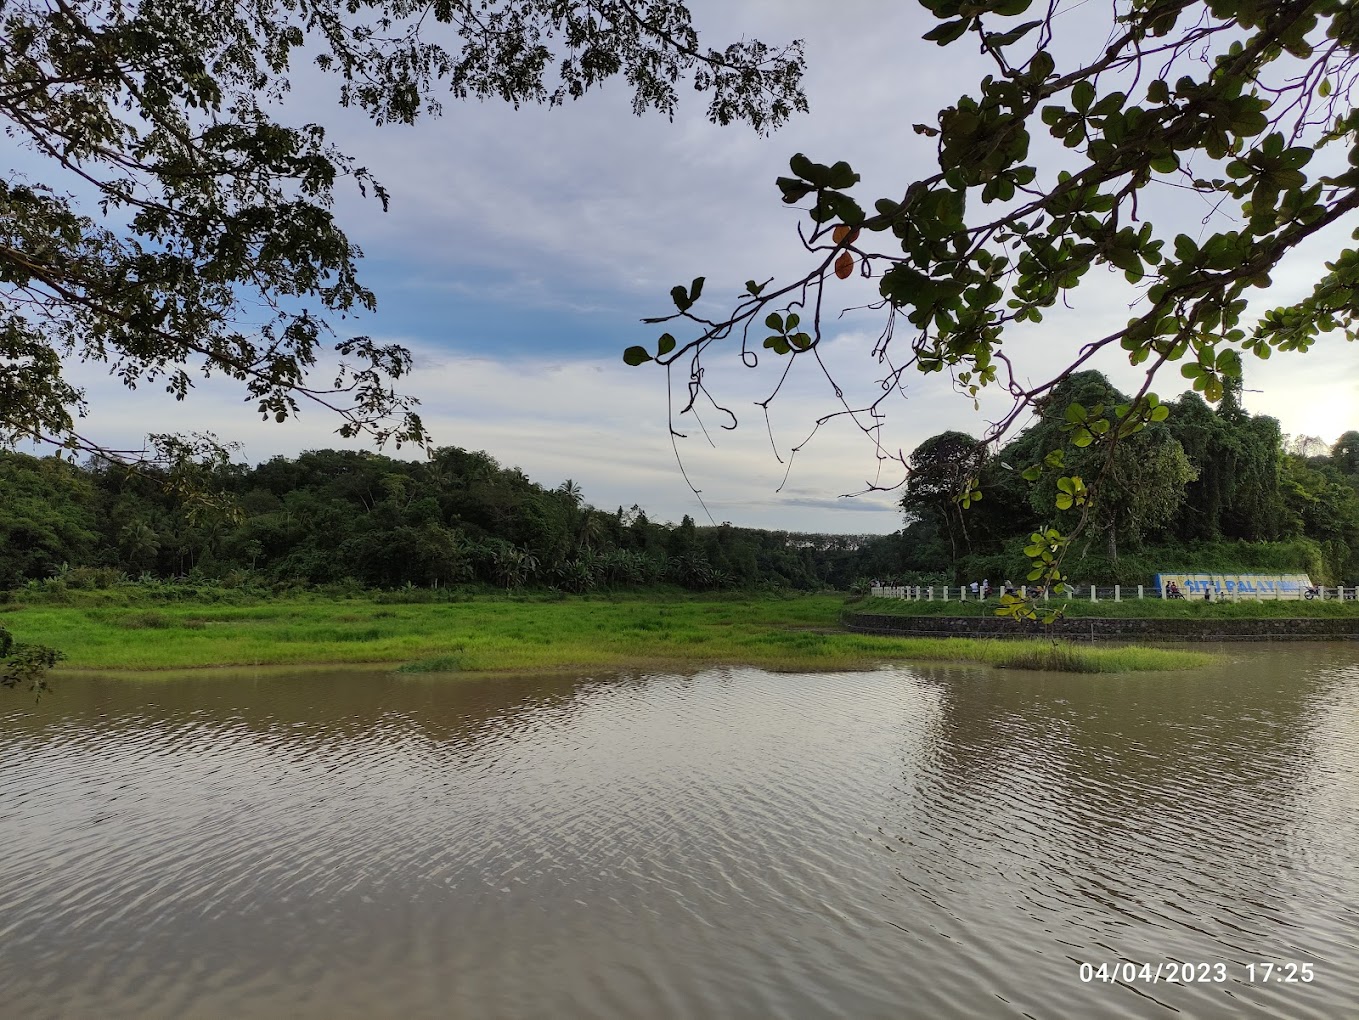 Destinasti Keindahan Wisata Situ Palayangan di Cimarga Lebak Banten